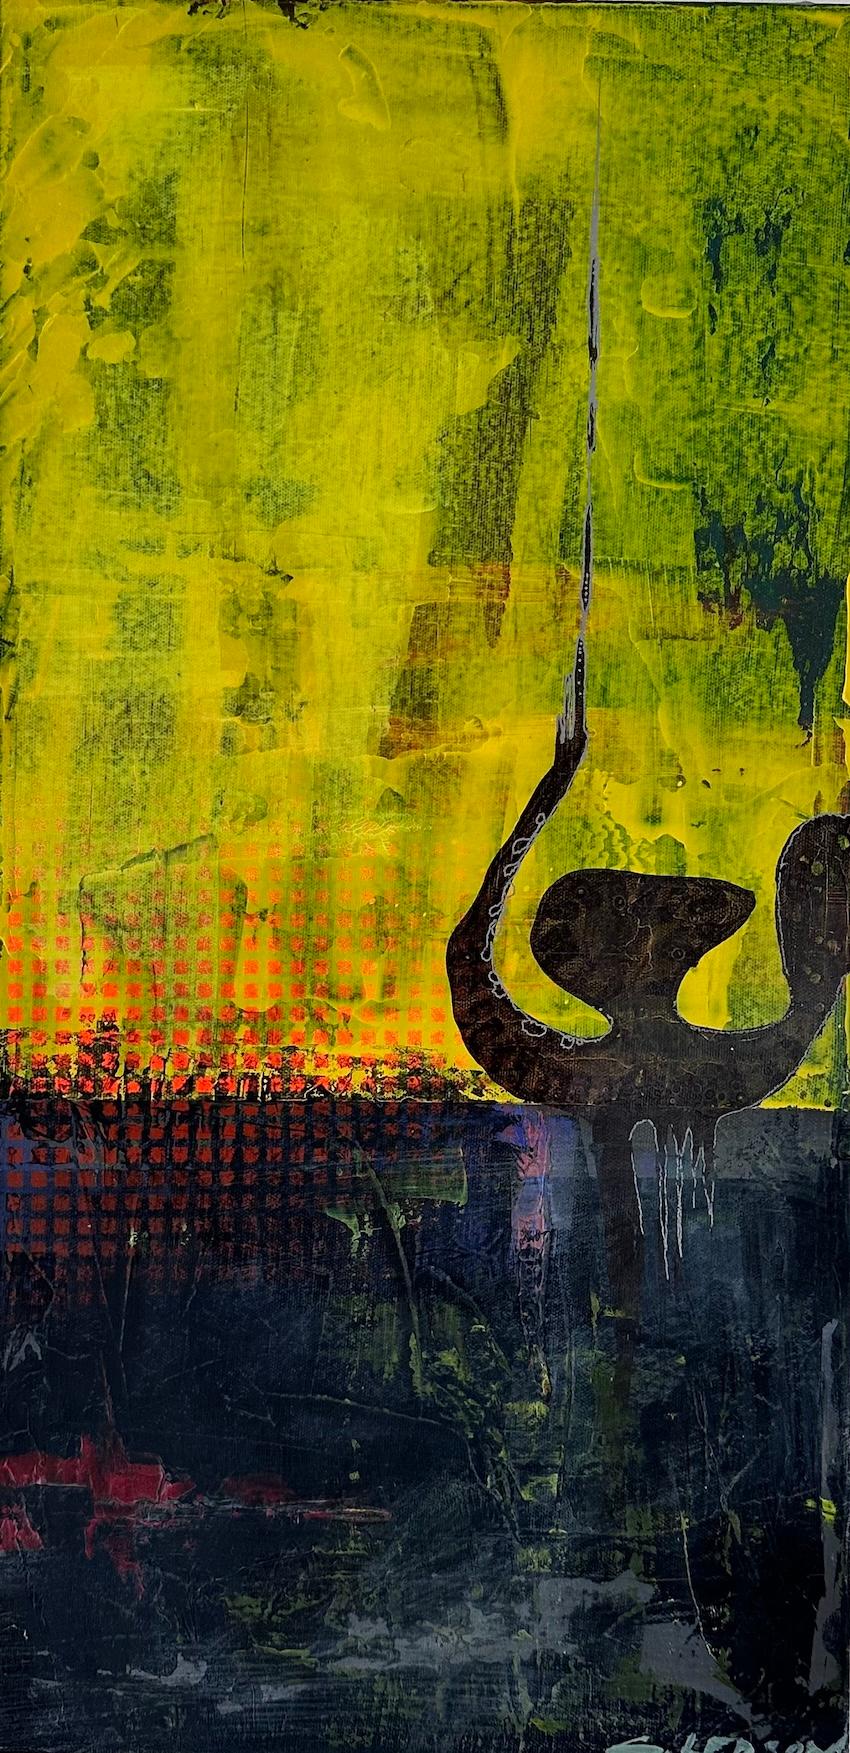 Beneath - contemporary semi-abstract mixed media painting